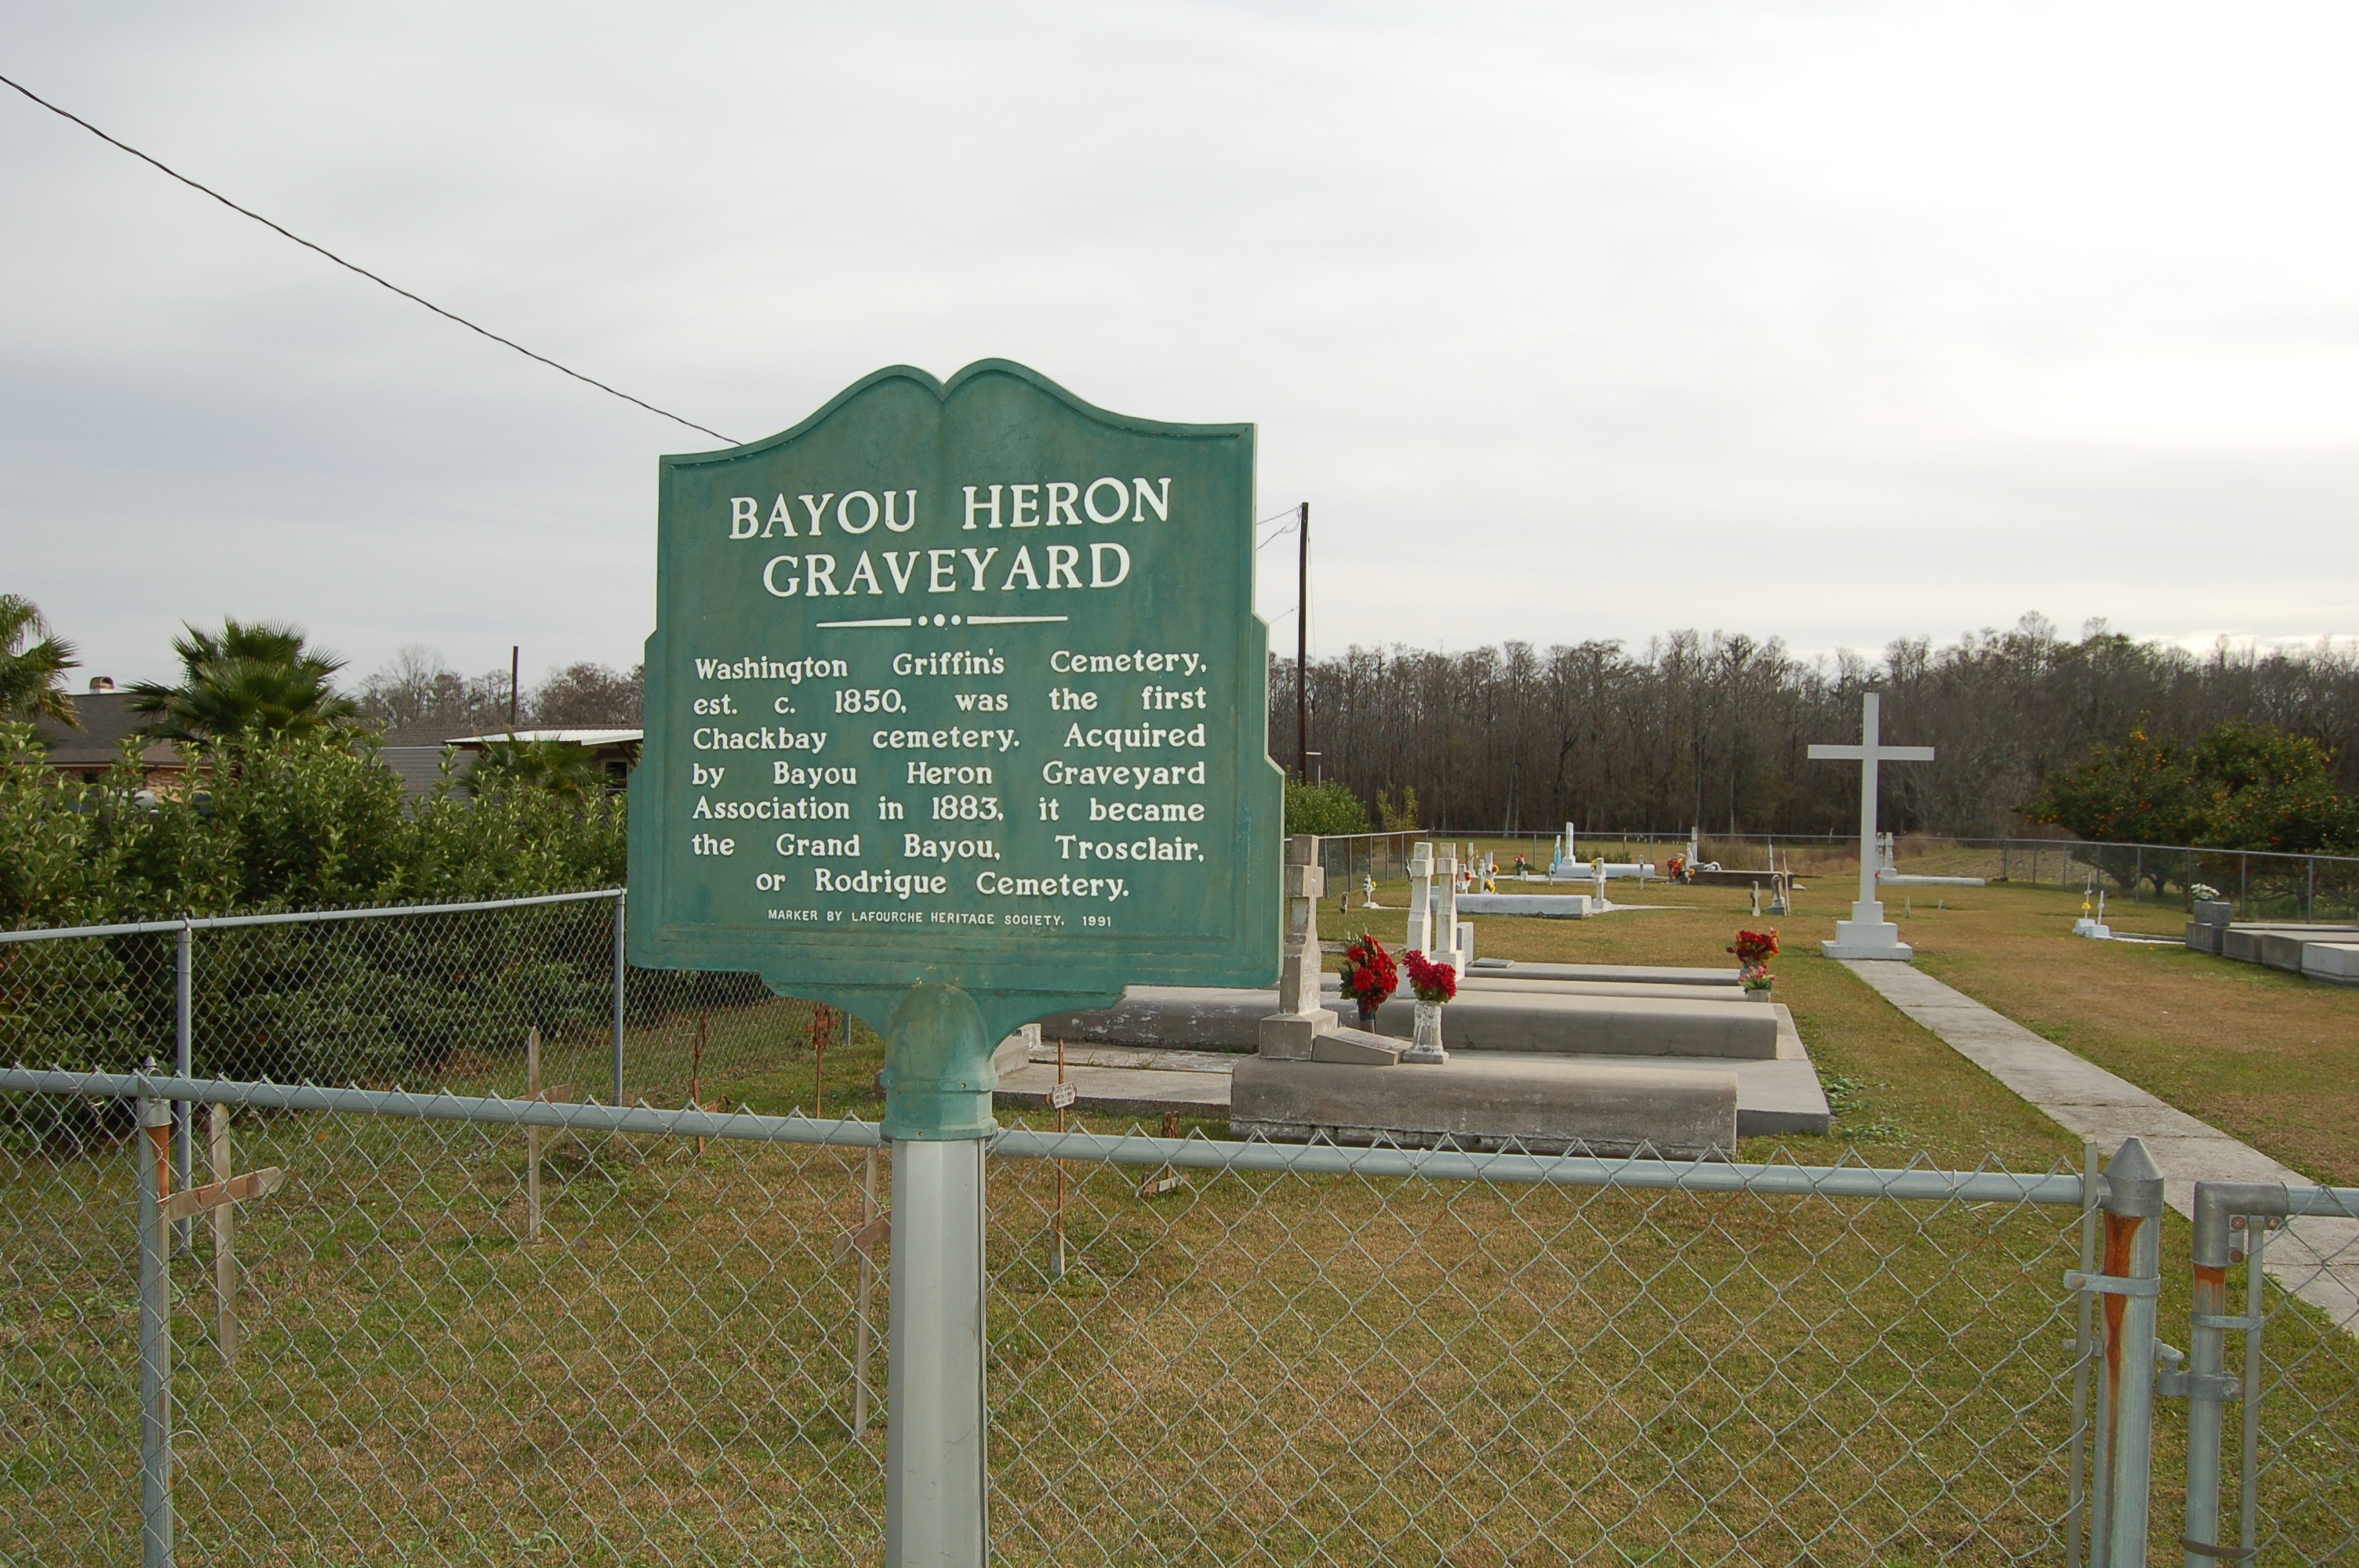 Bayou Heron Graveyard